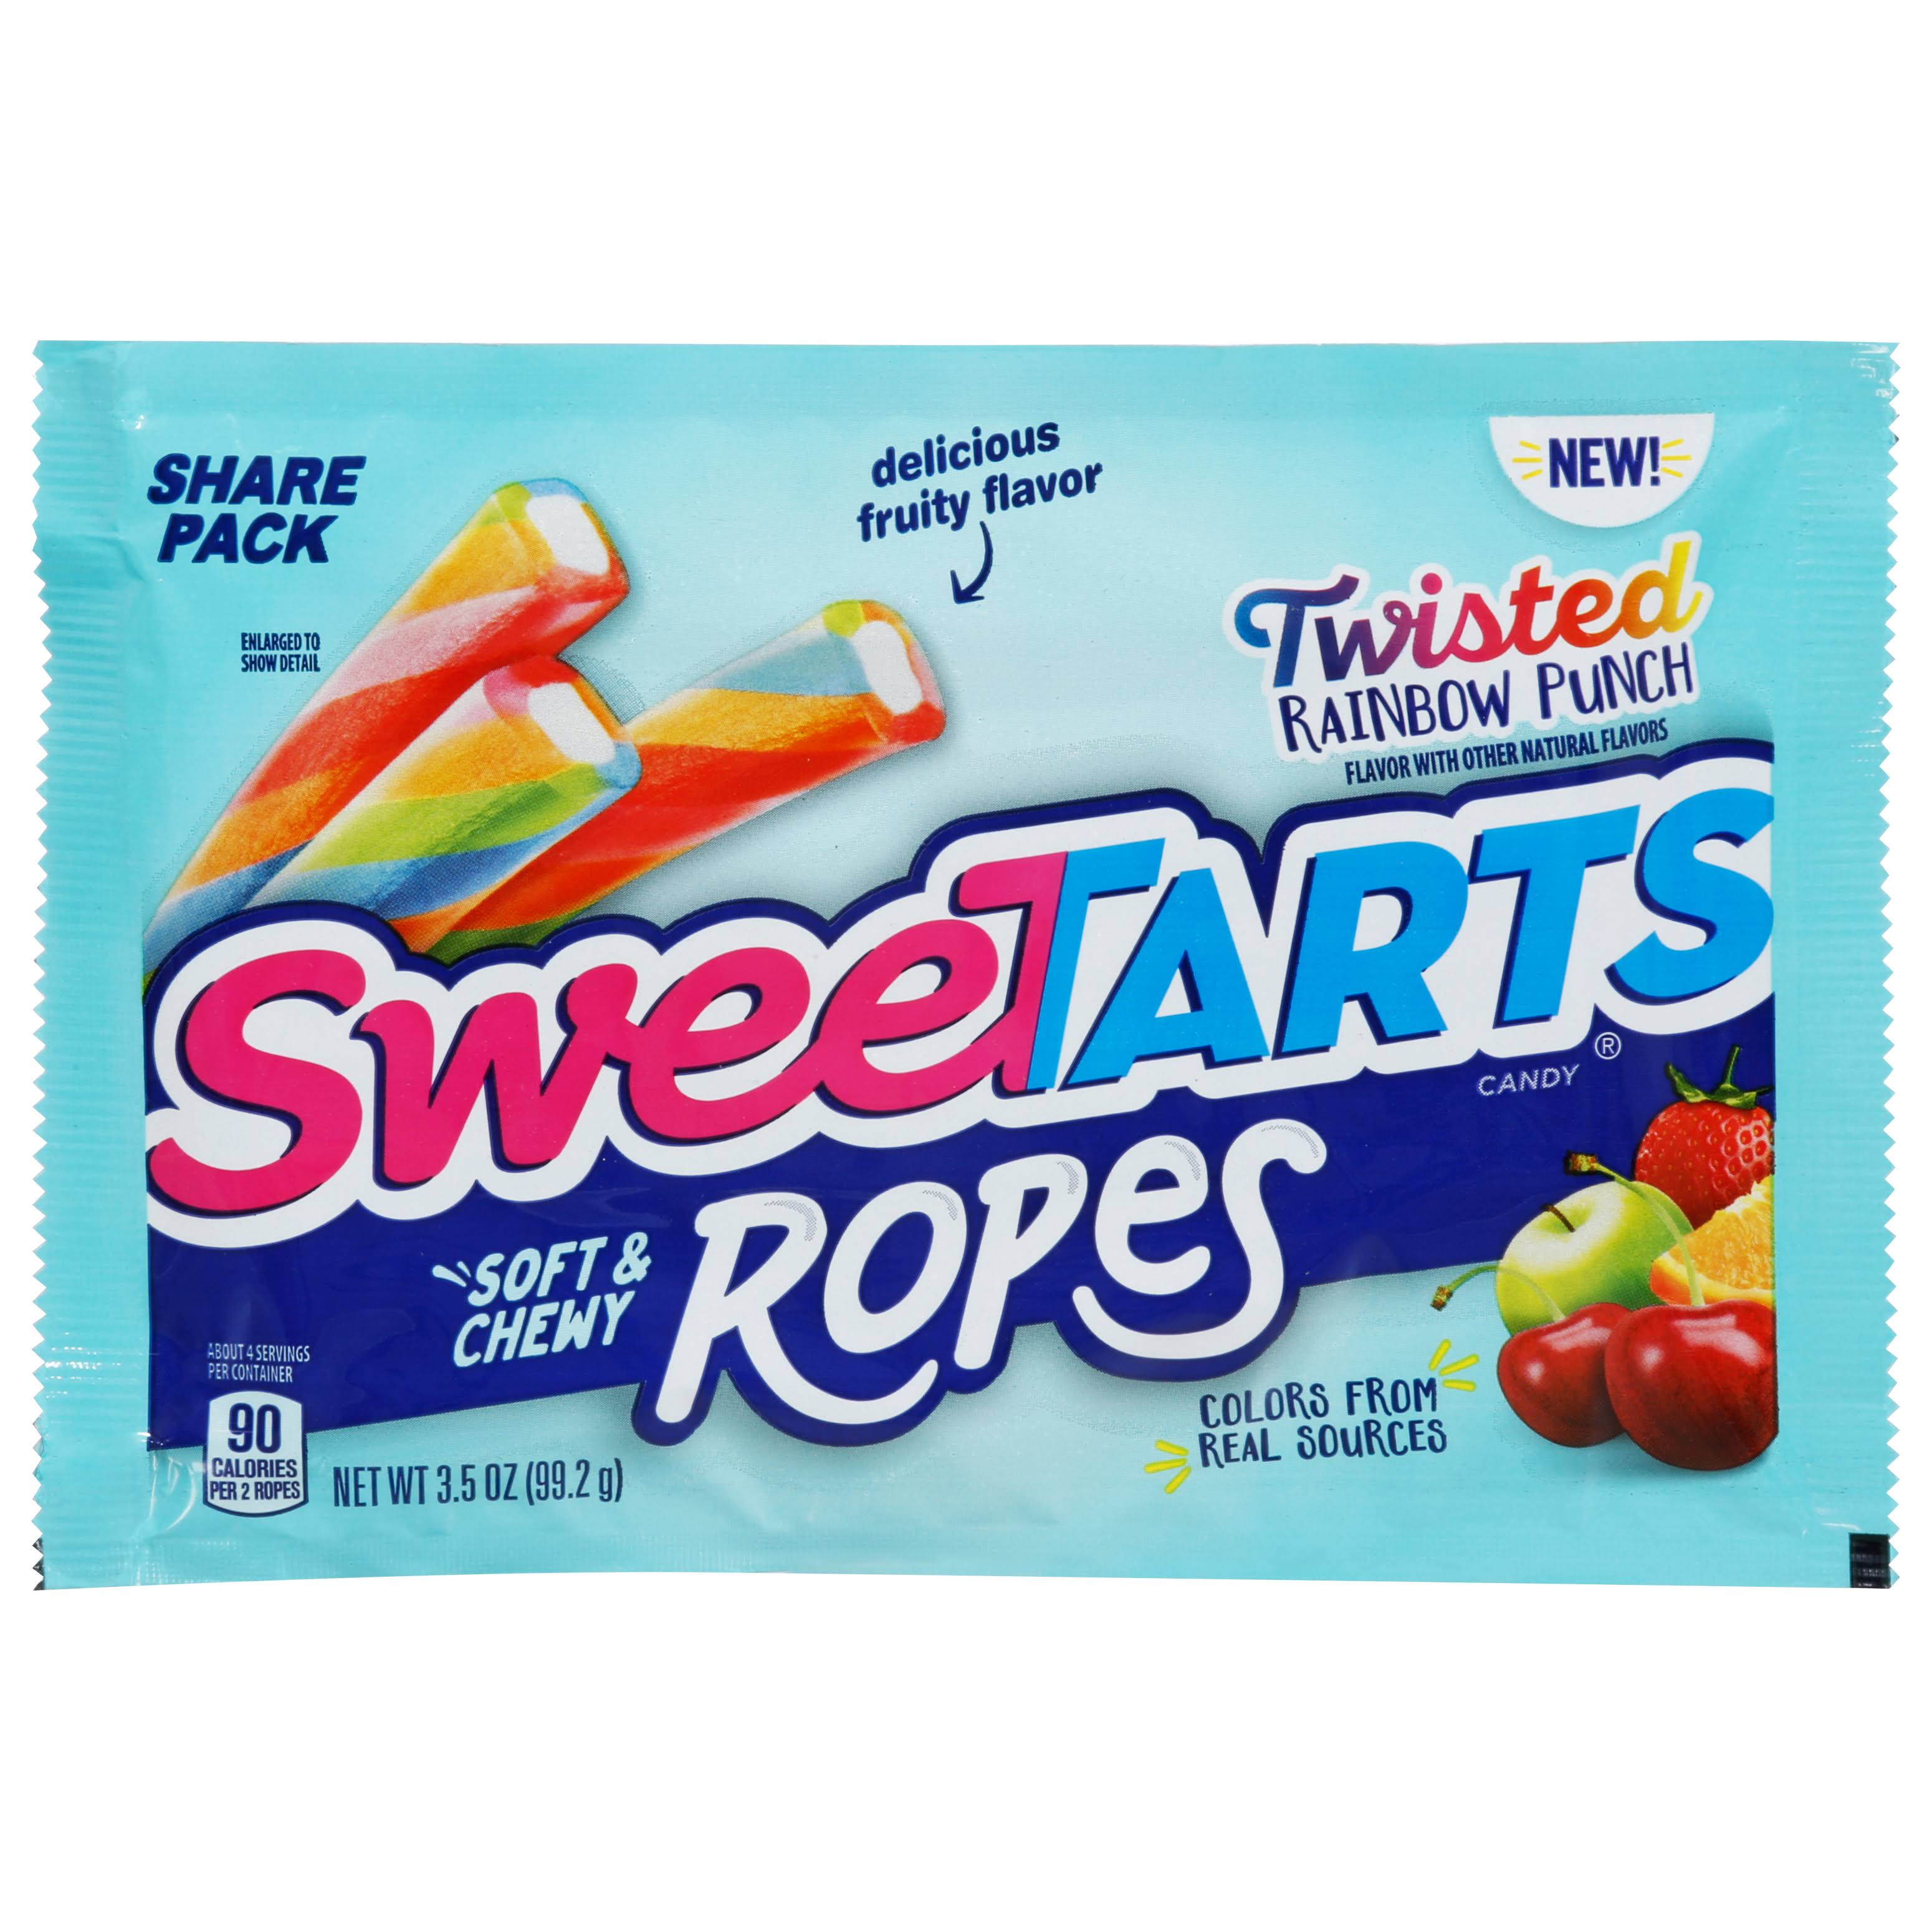 Sweetarts Ropes, Twisted Rainbow Punch, Share Pack - 3.5 oz